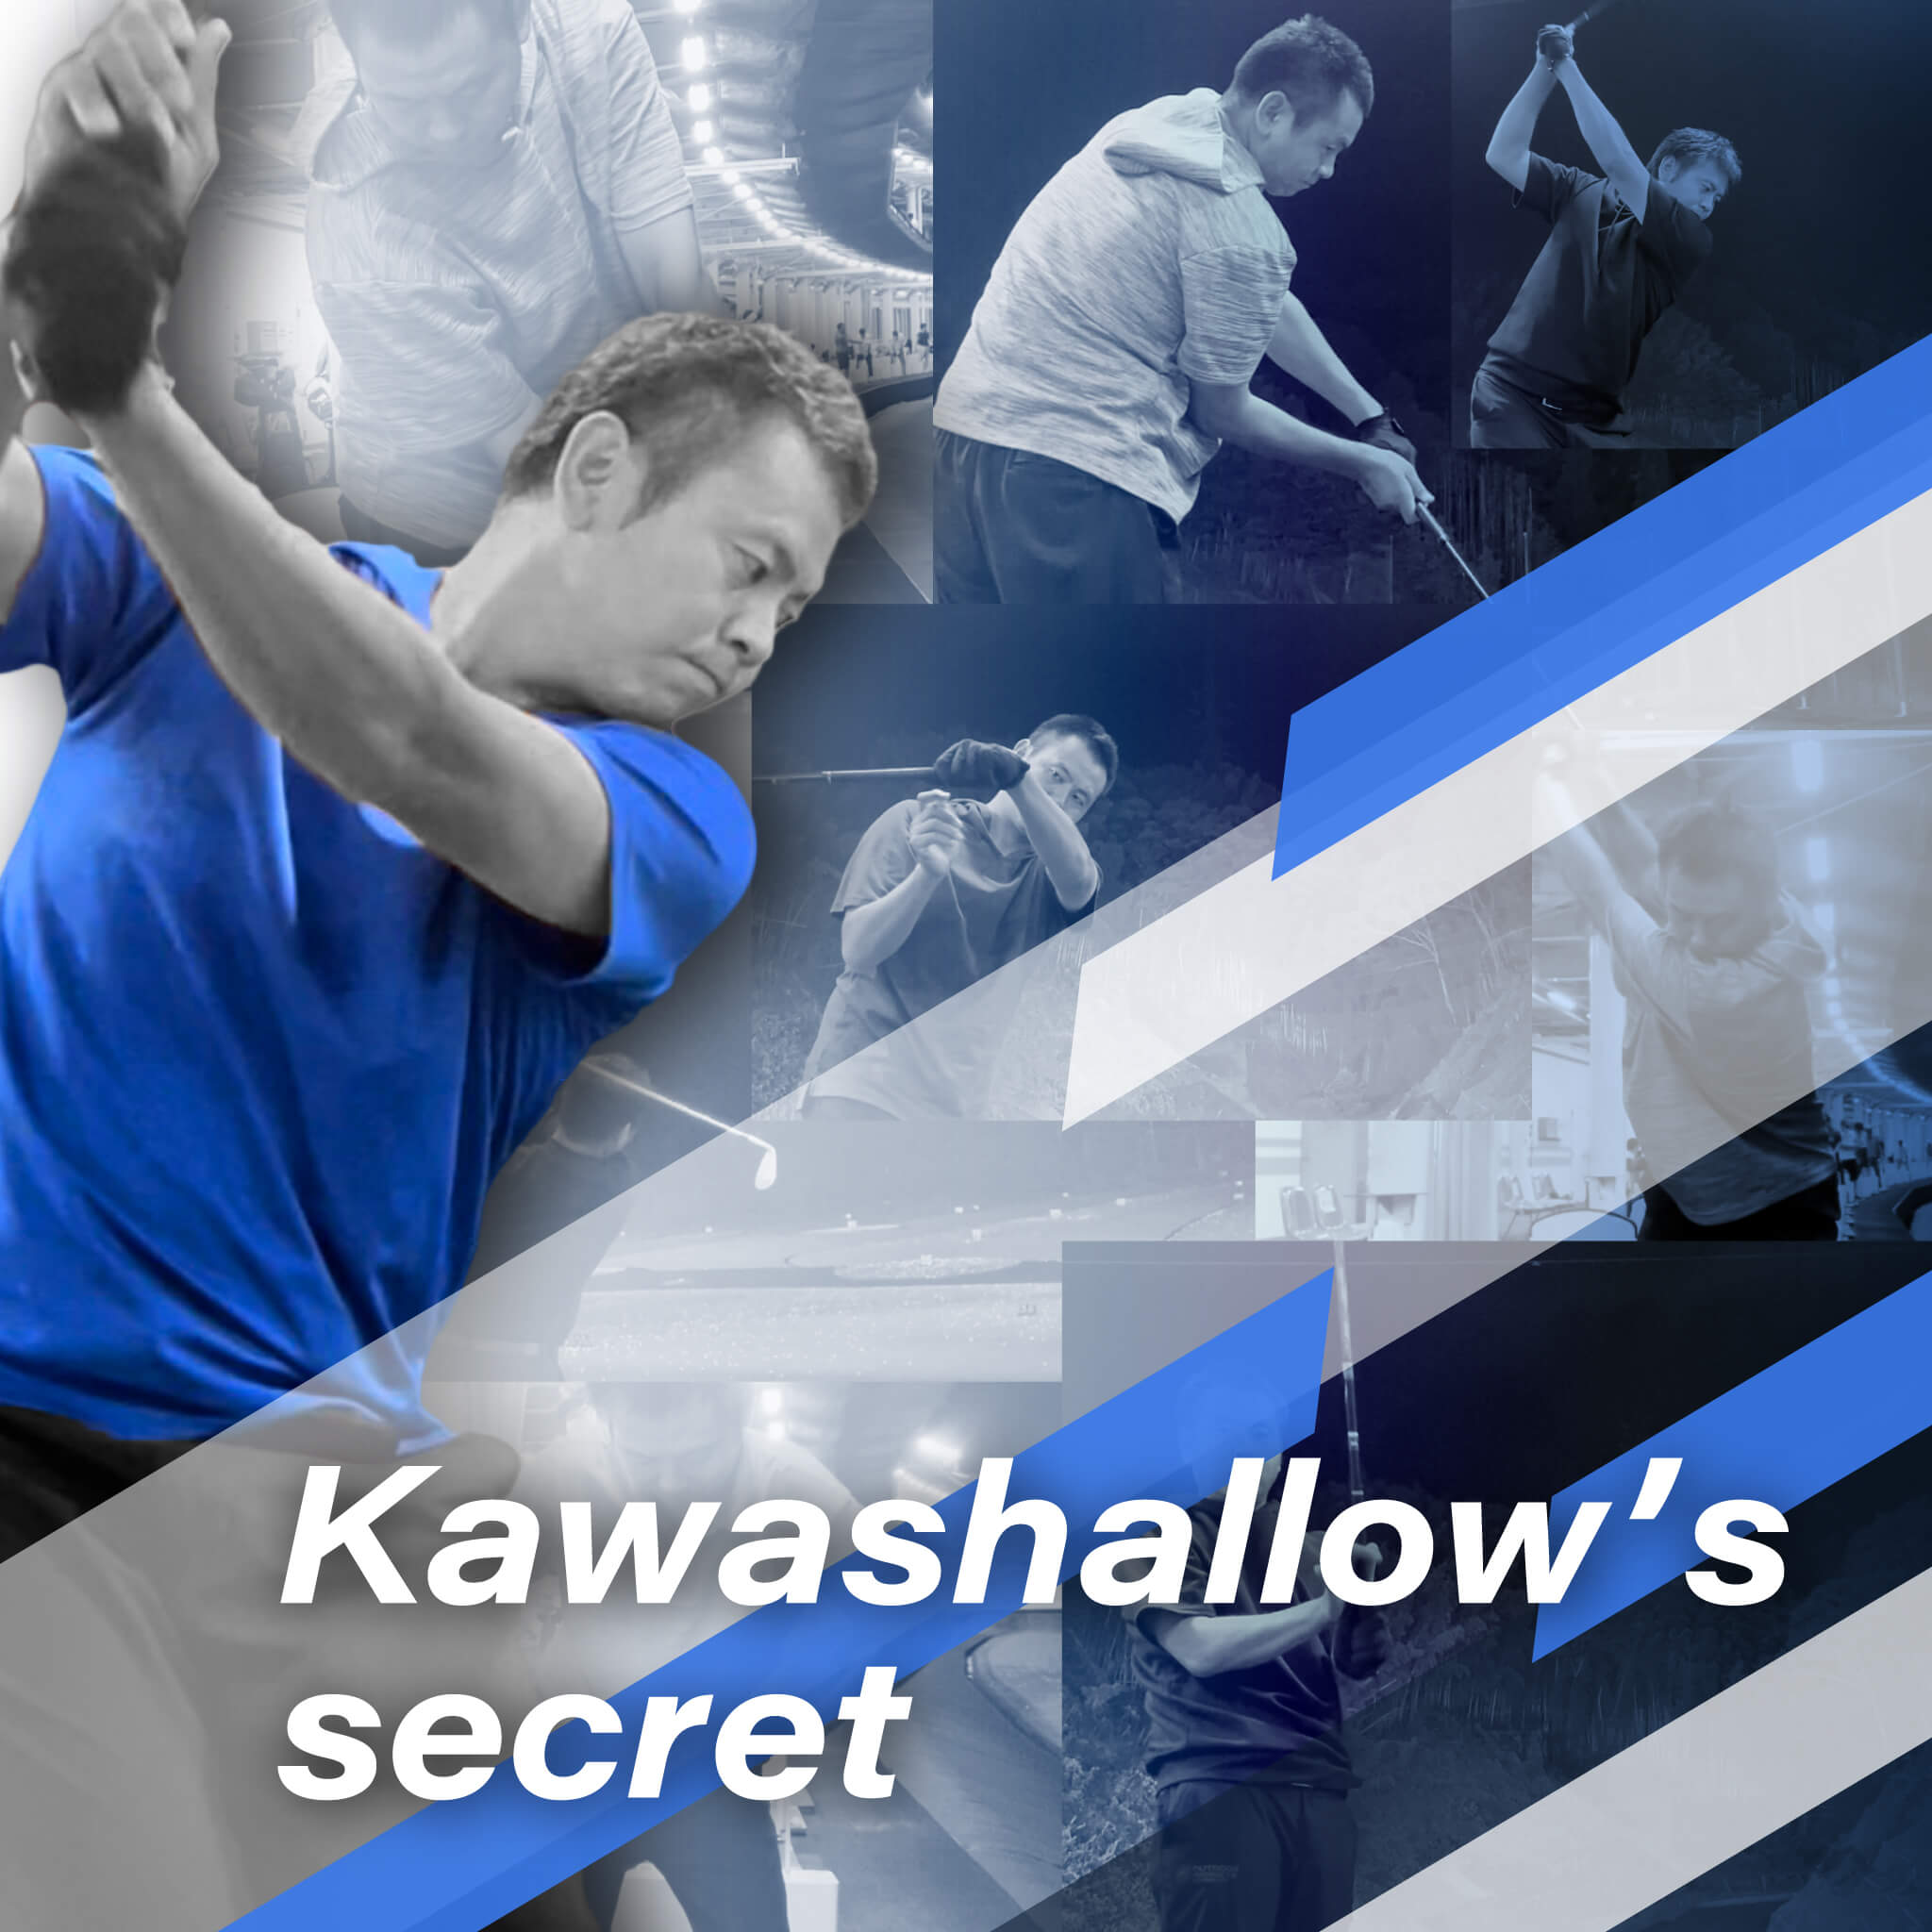 Kawashallow's secret